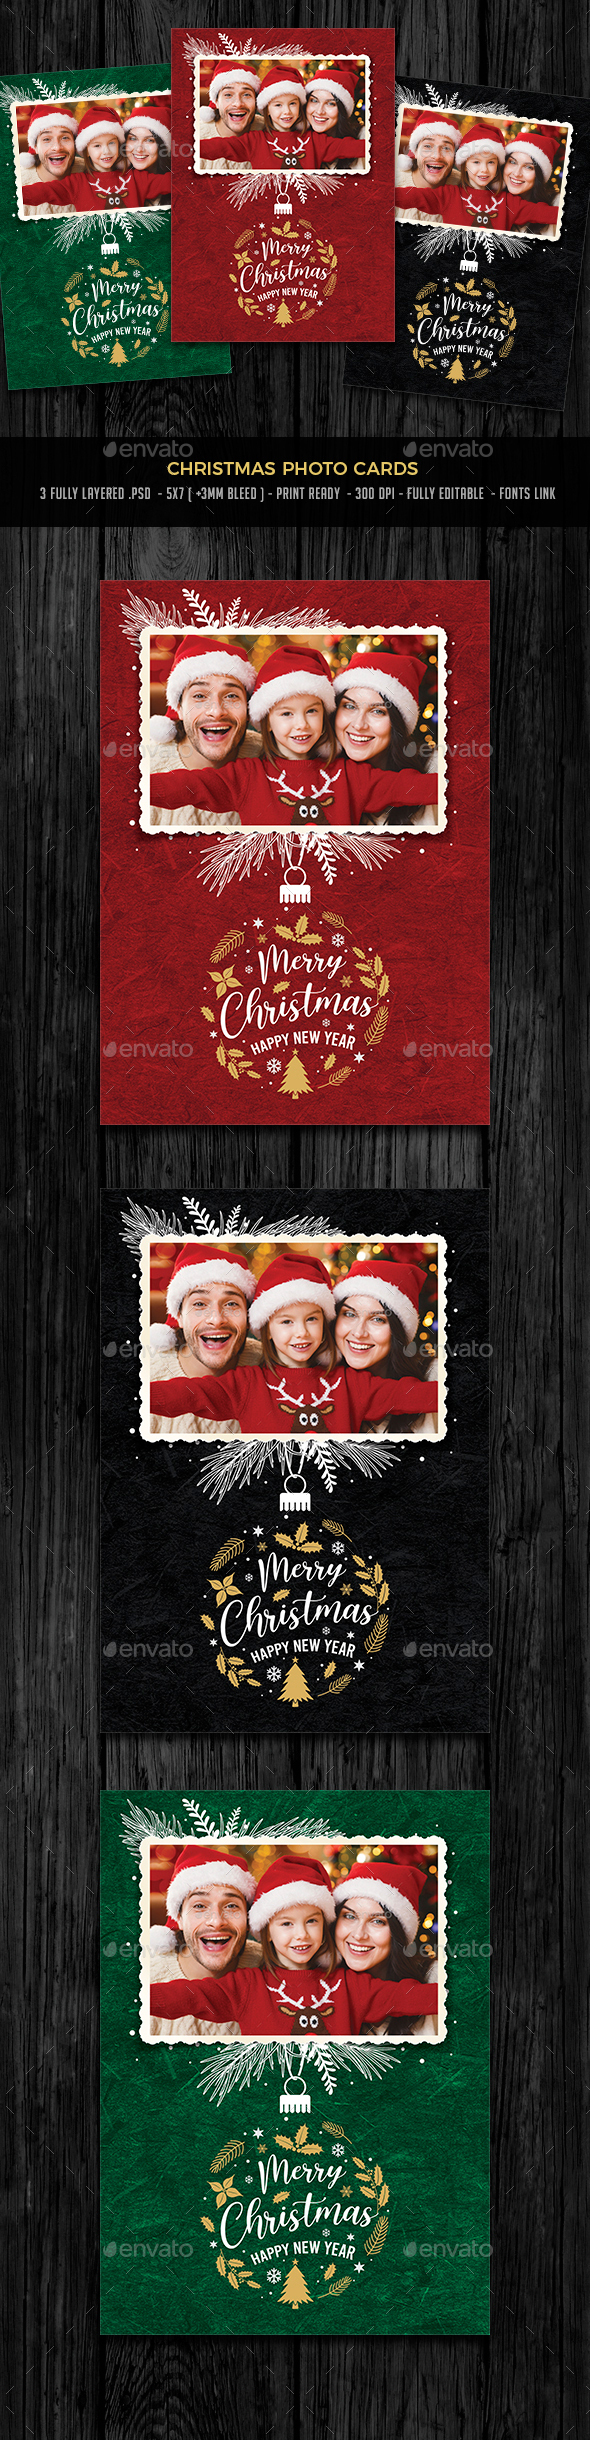 Christmas Photo Card / Invitation